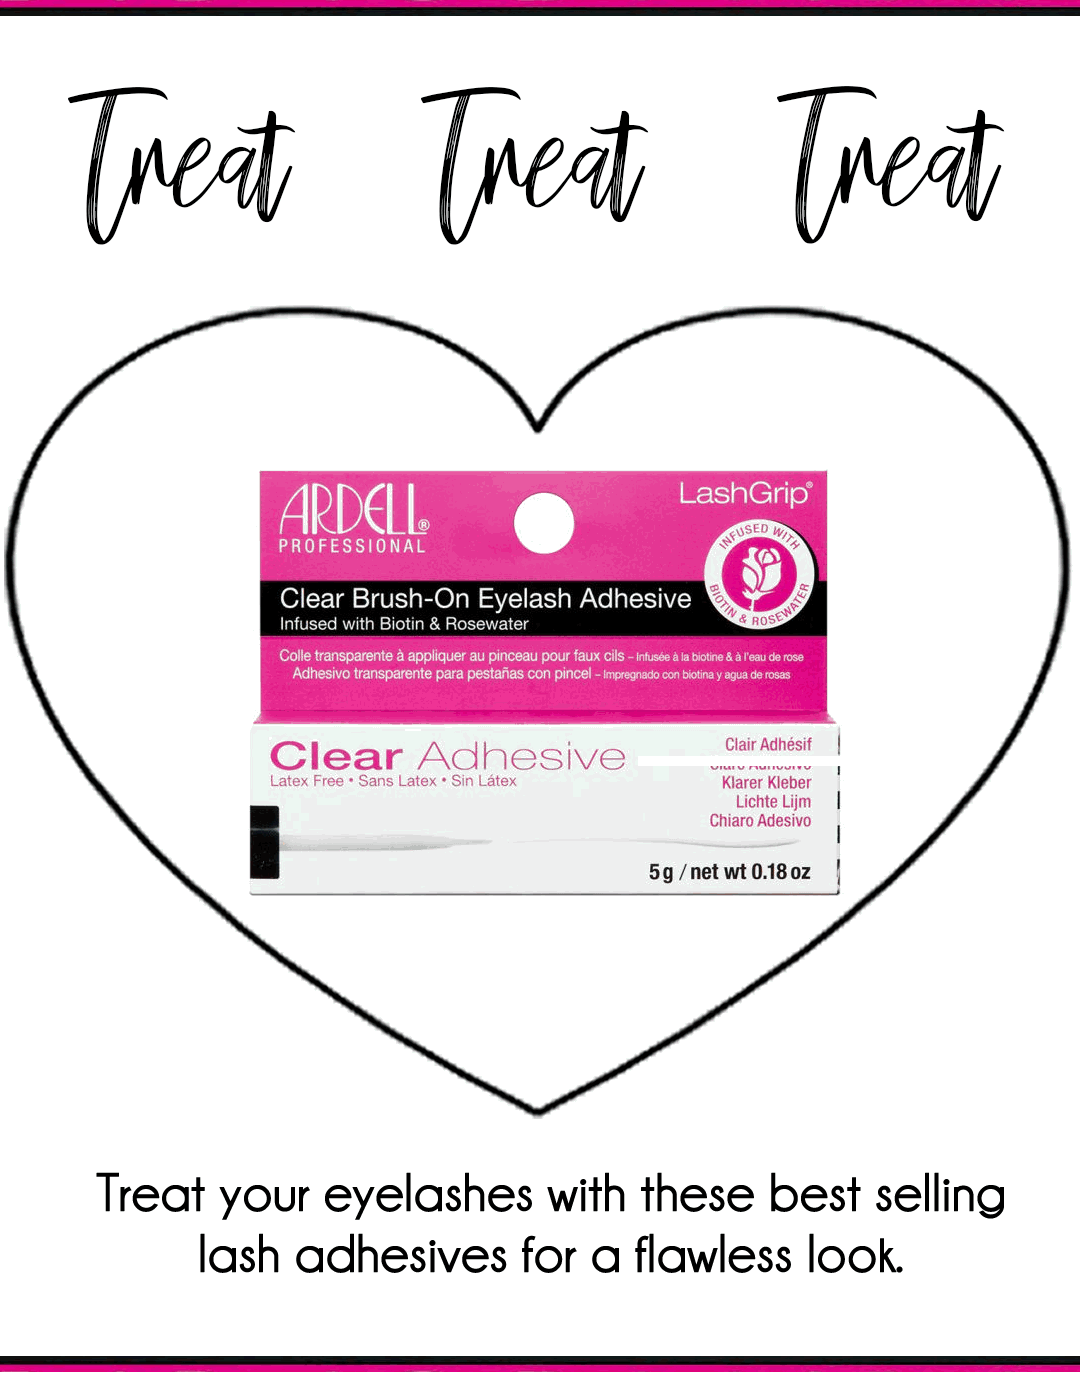 Free Eyelash Adhesive Offer